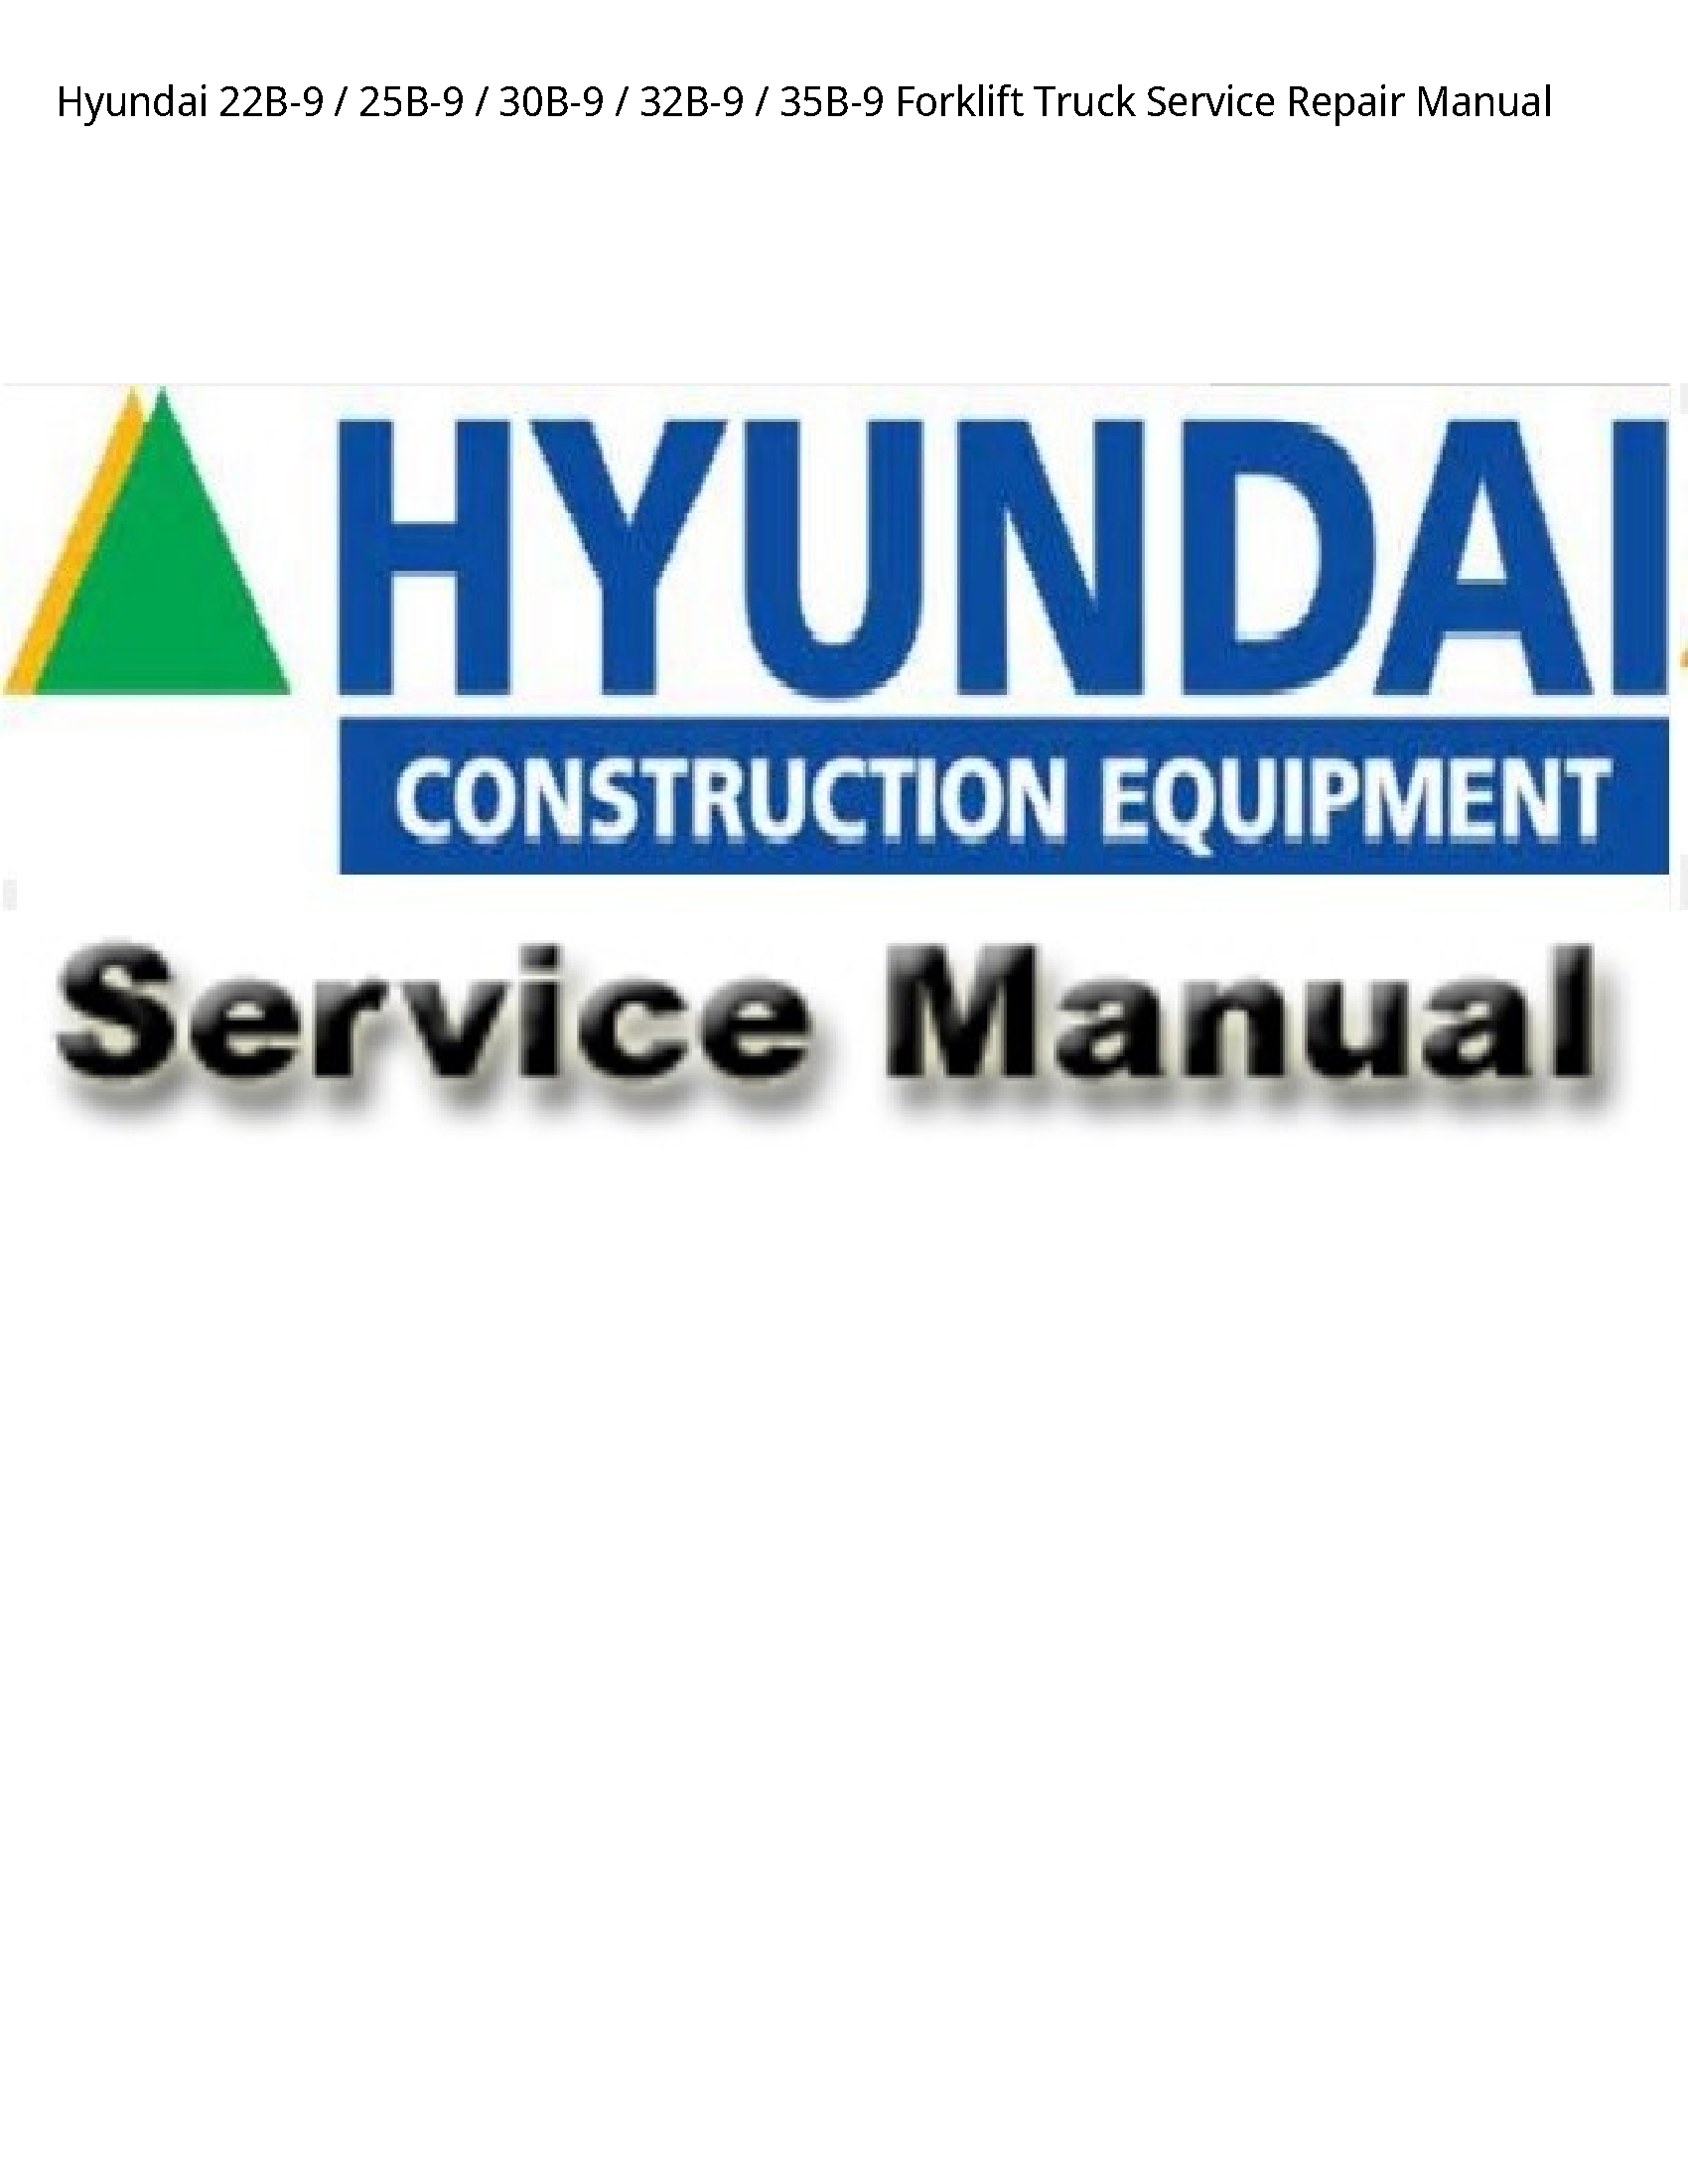 Hyundai 22B-9 Forklift Truck manual